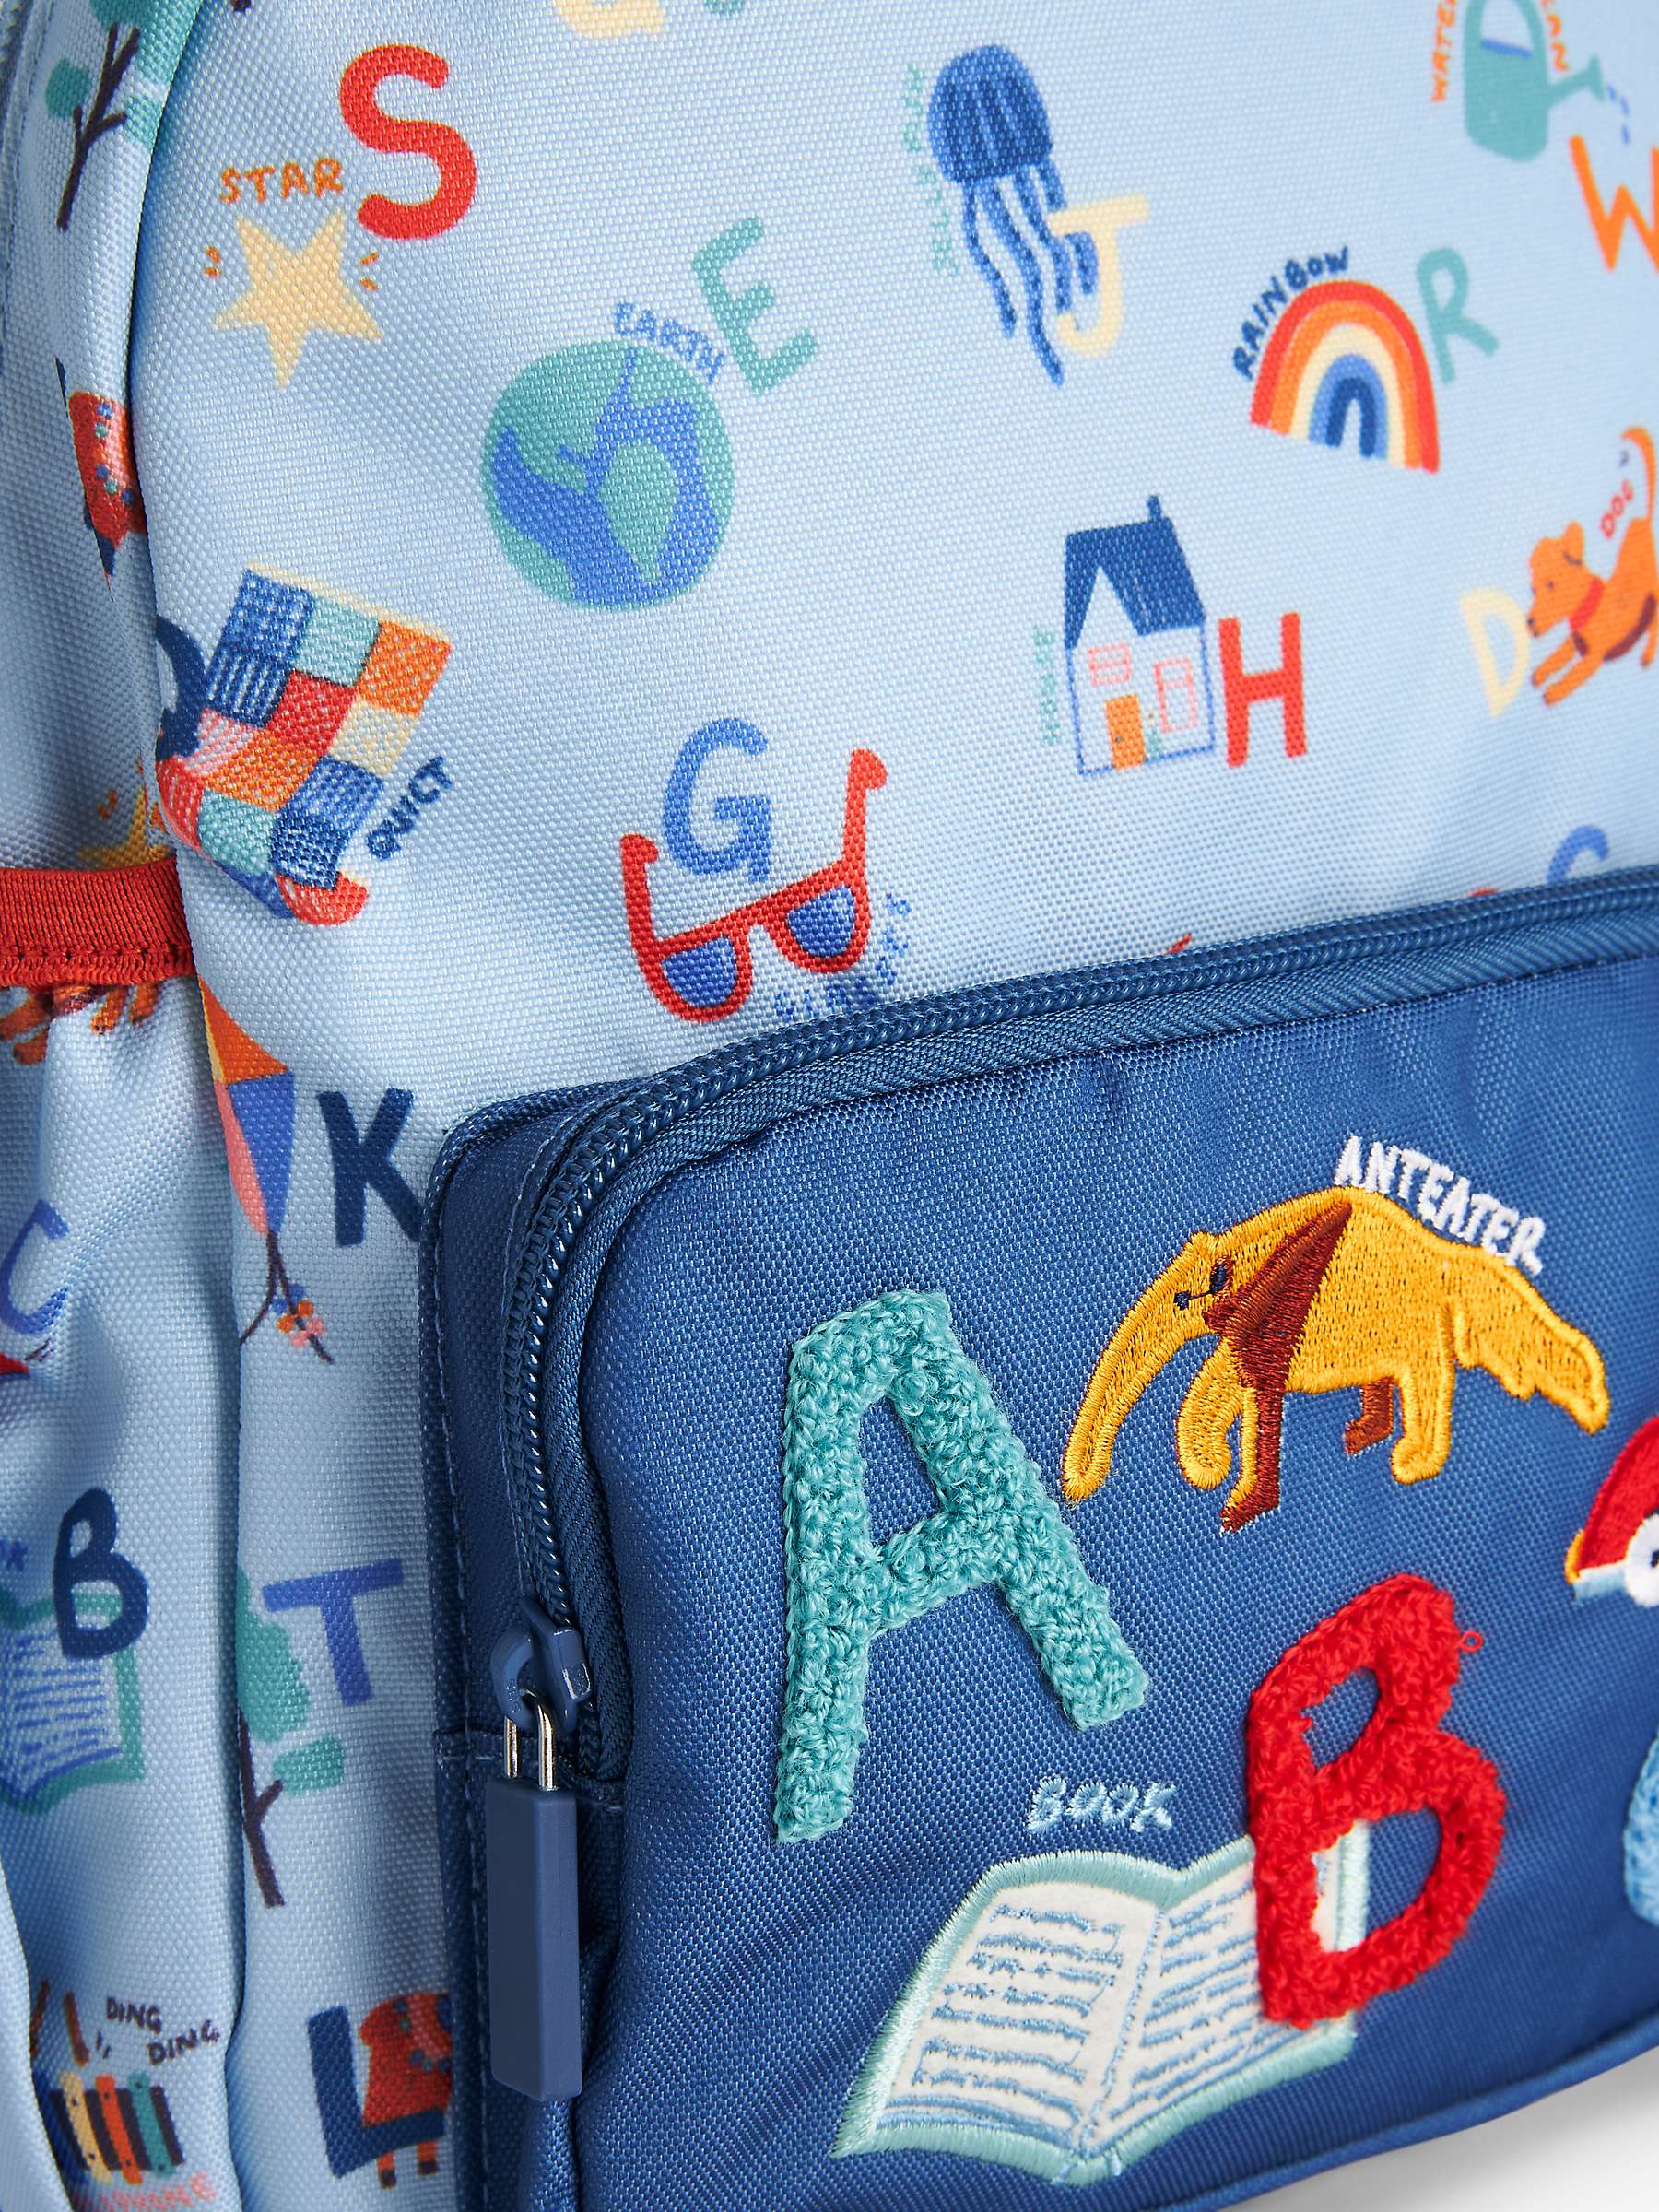 Buy John Lewis Kids' ABC Backpack, Blue/Multi Online at johnlewis.com